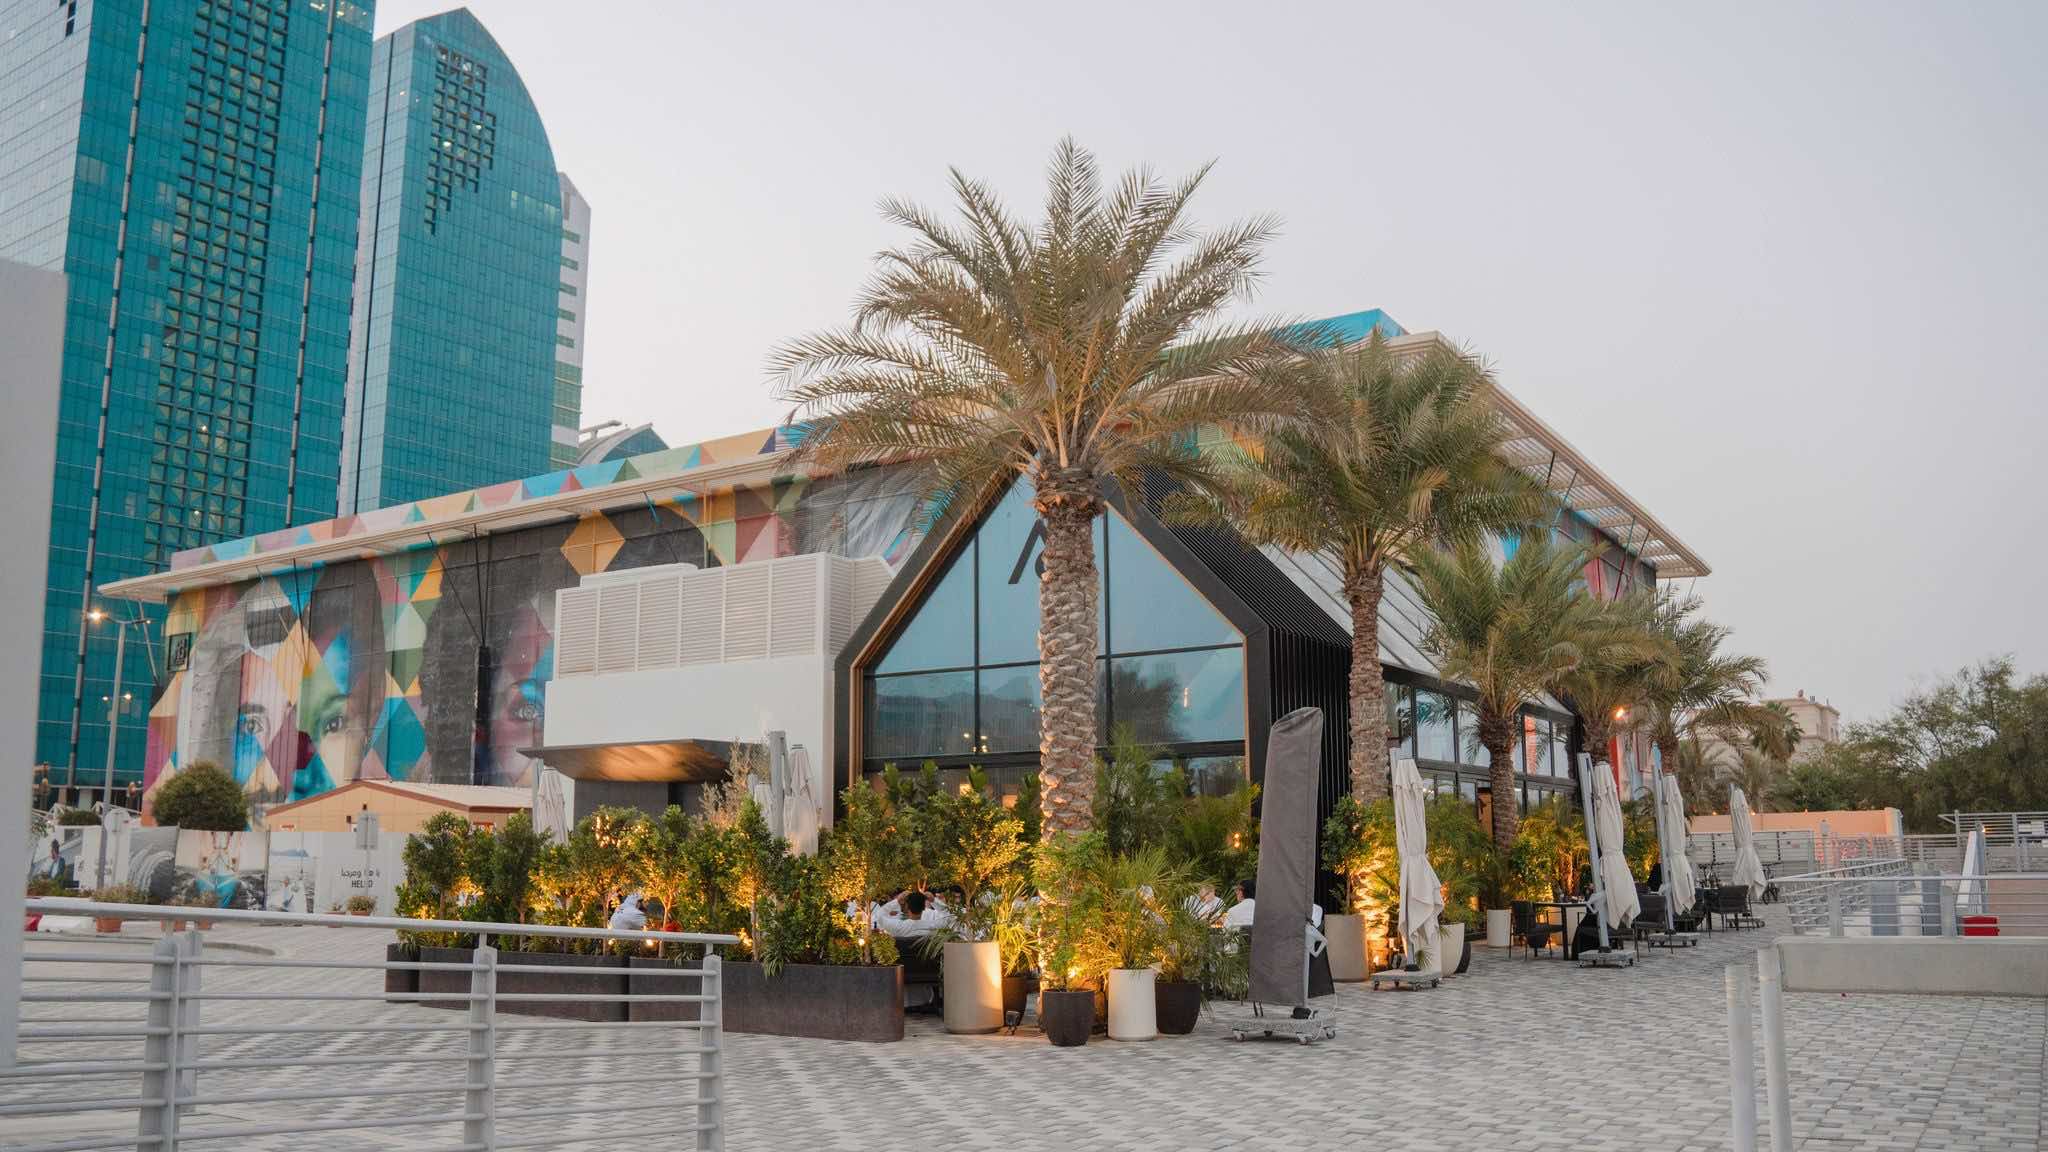 Abu Dhabi dining